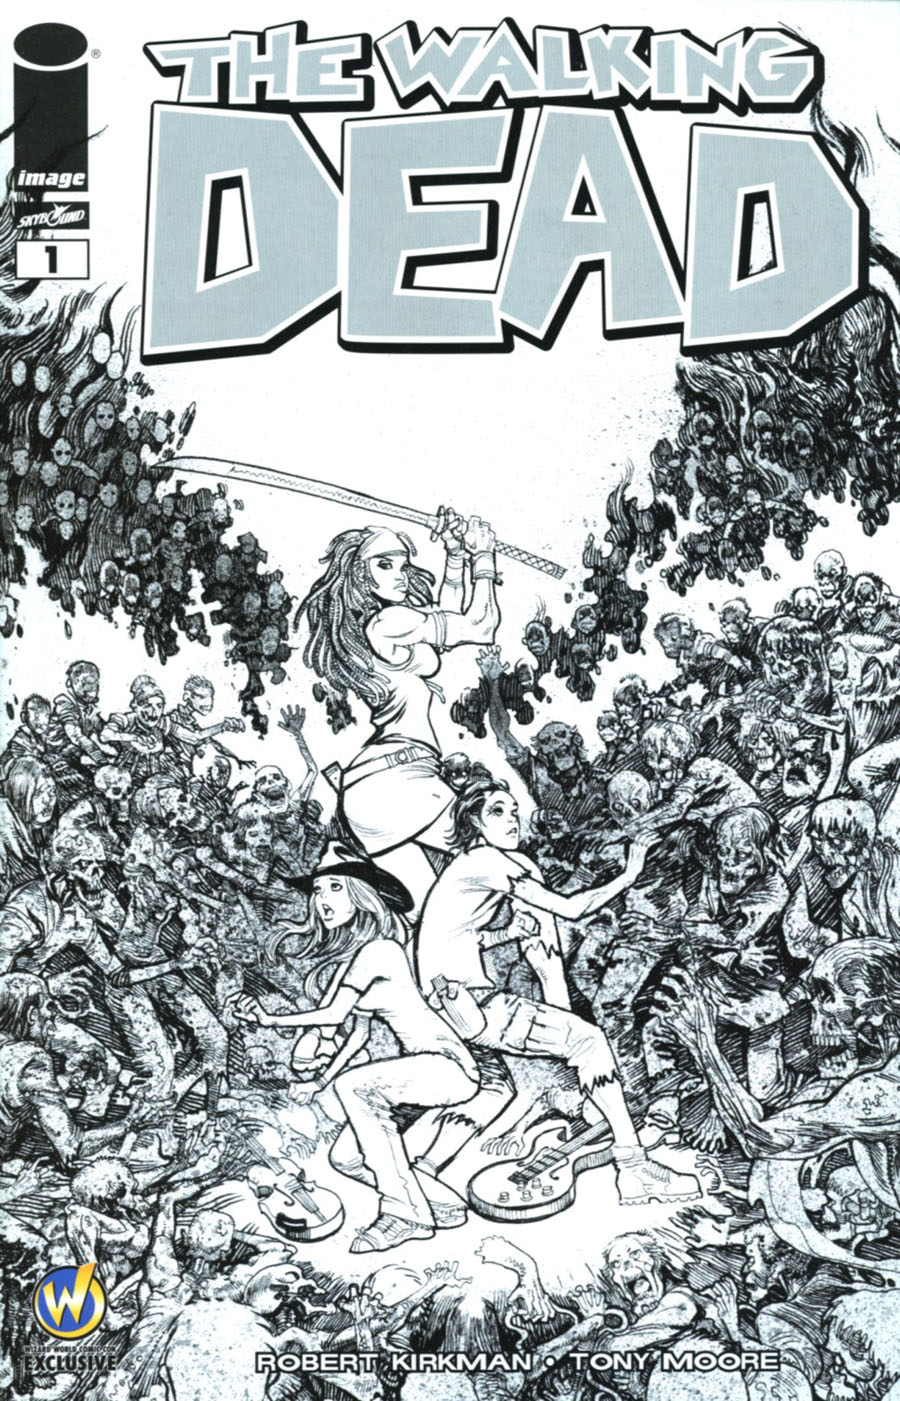 Walking Dead #1 Cover S Wizard World Comic Con Austin VIP Exclusive Moritat Sketch Variant Cover